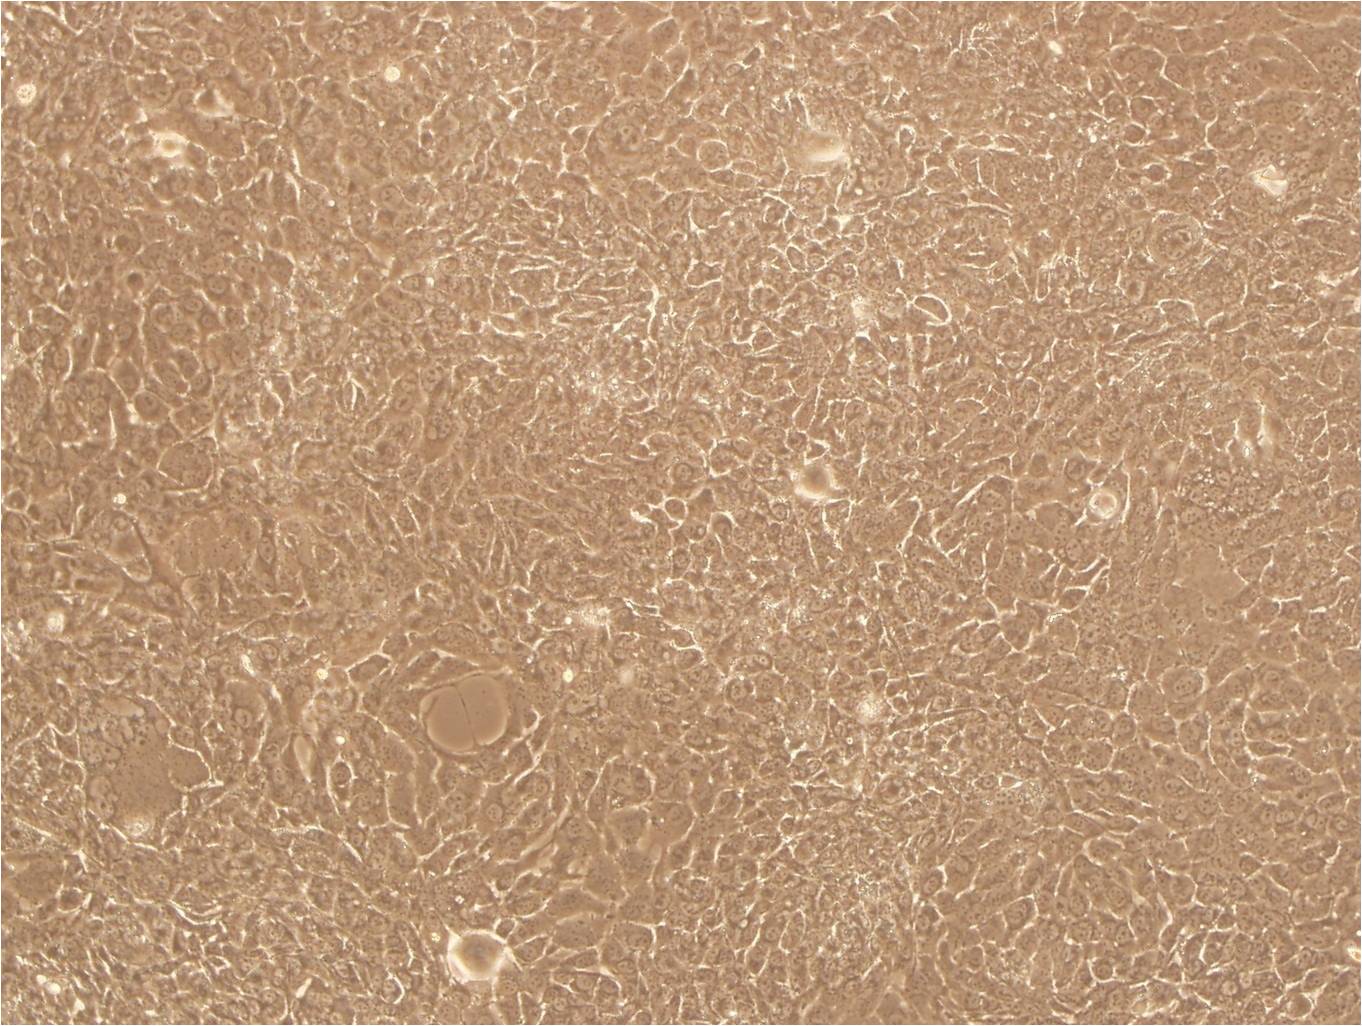 NCI-H1975 Cells|人肺腺癌需消化细胞系,NCI-H1975 Cells